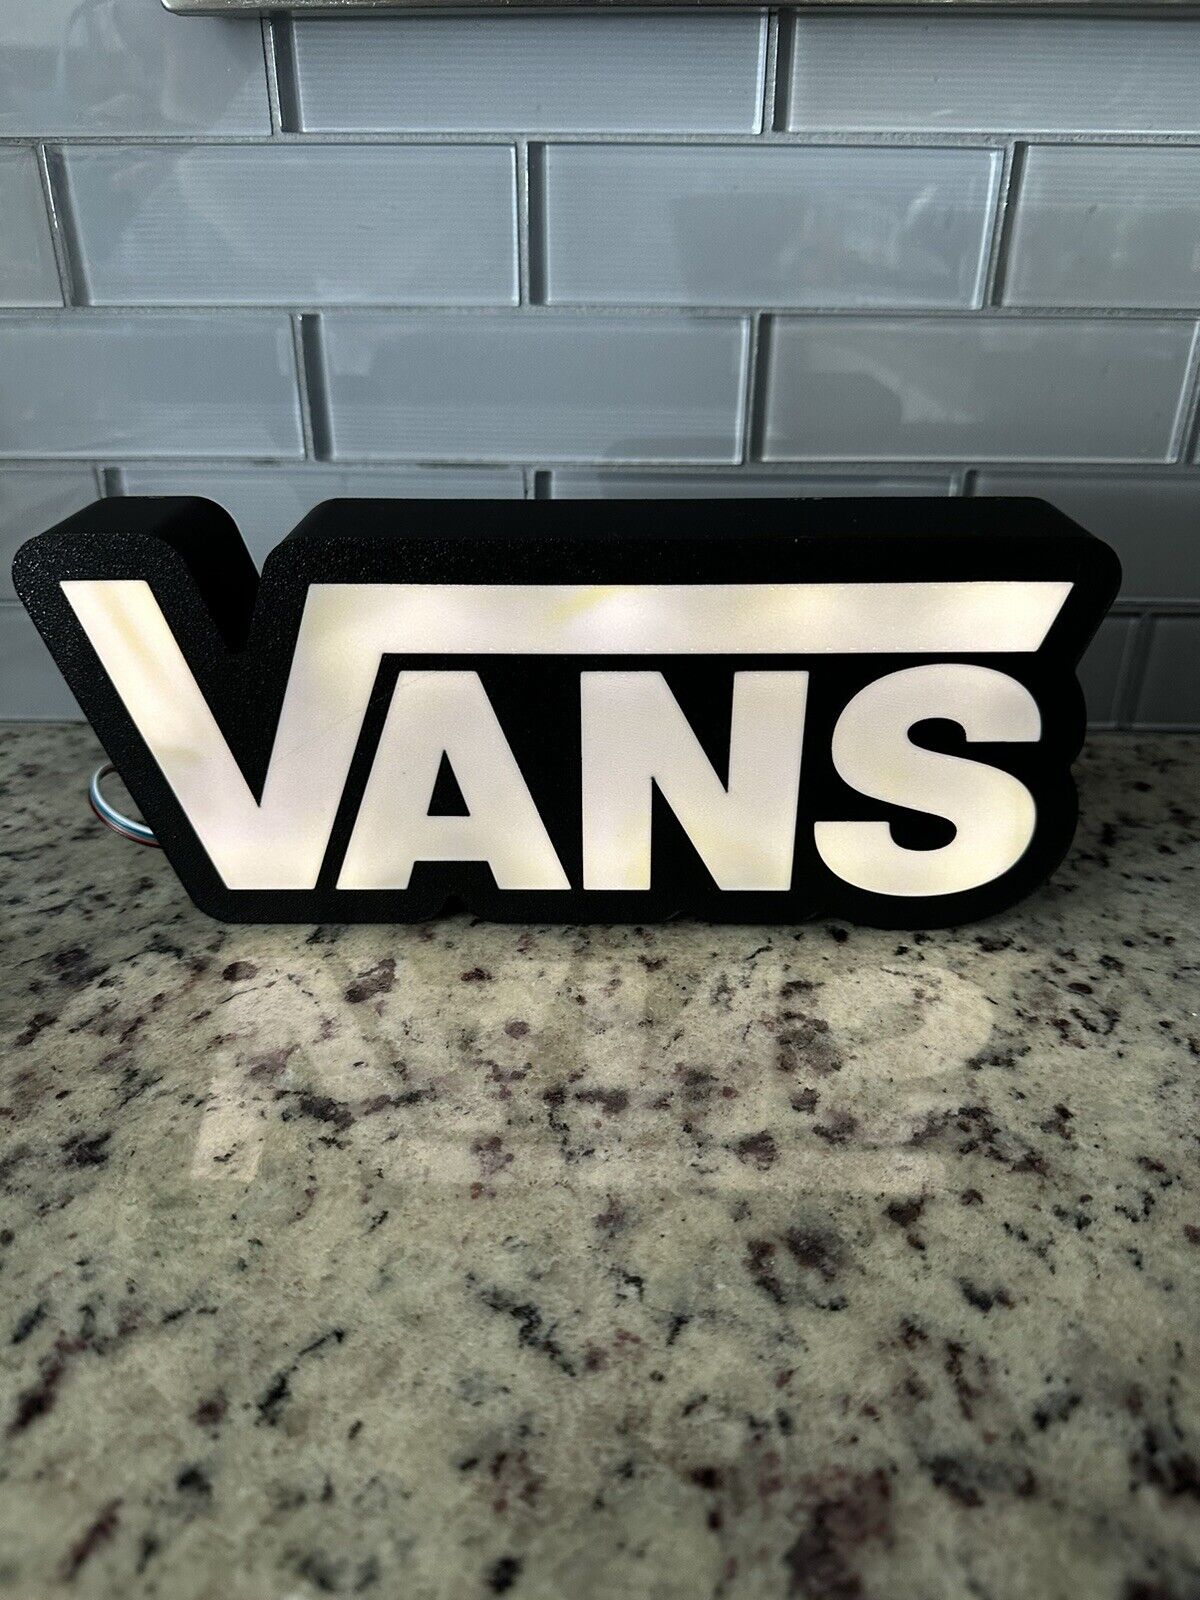 Vans Custom Made LED Display Sign